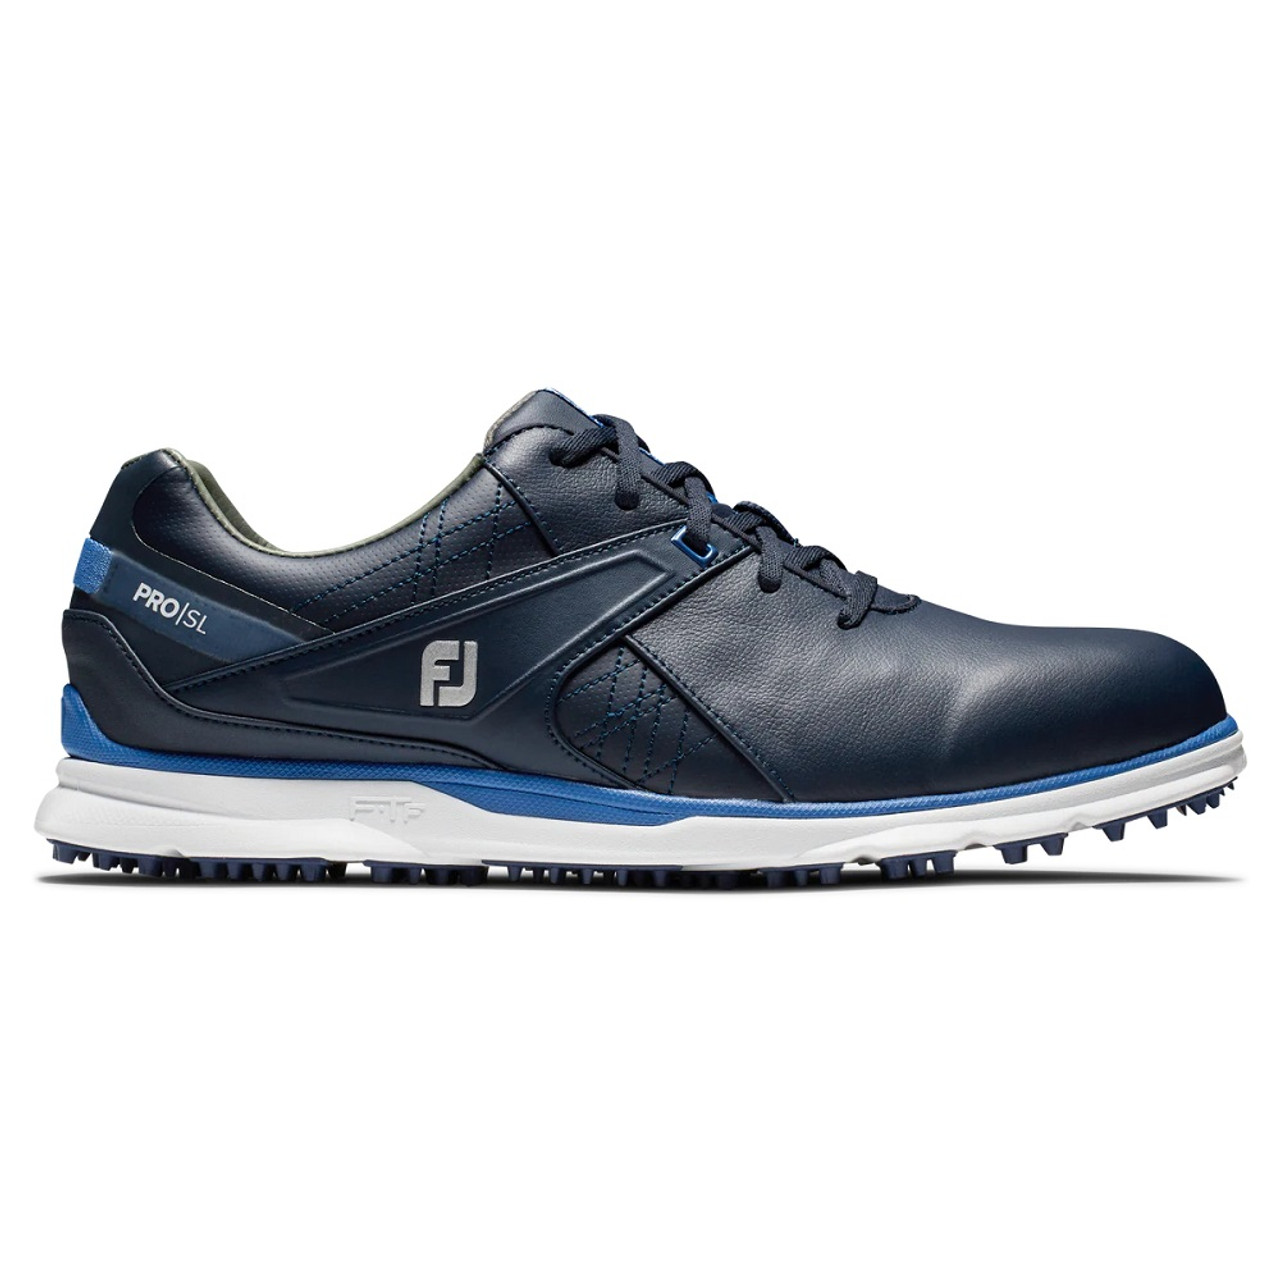 FootJoy Men's Pro|SL Golf Shoes - 53812 Navy/Light Blue - Maple